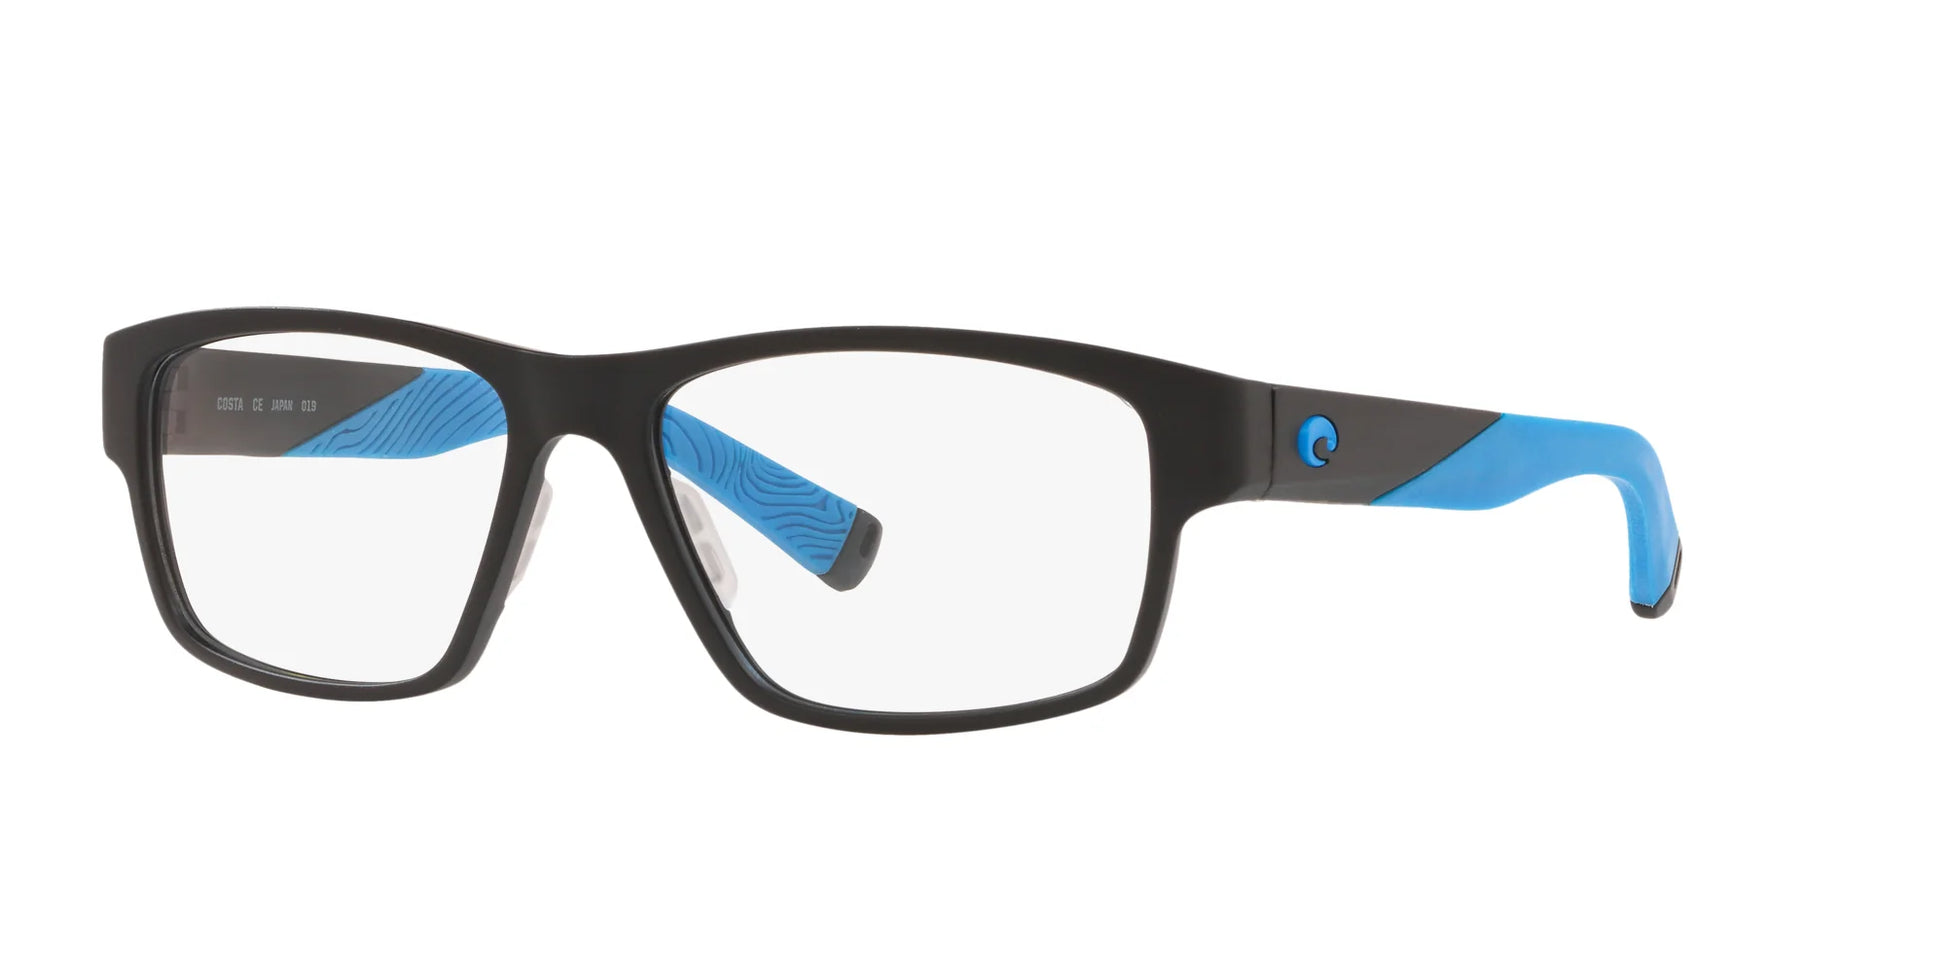 Costa OCR300 6S8010 Eyeglasses Matte Black / Blue Rubber